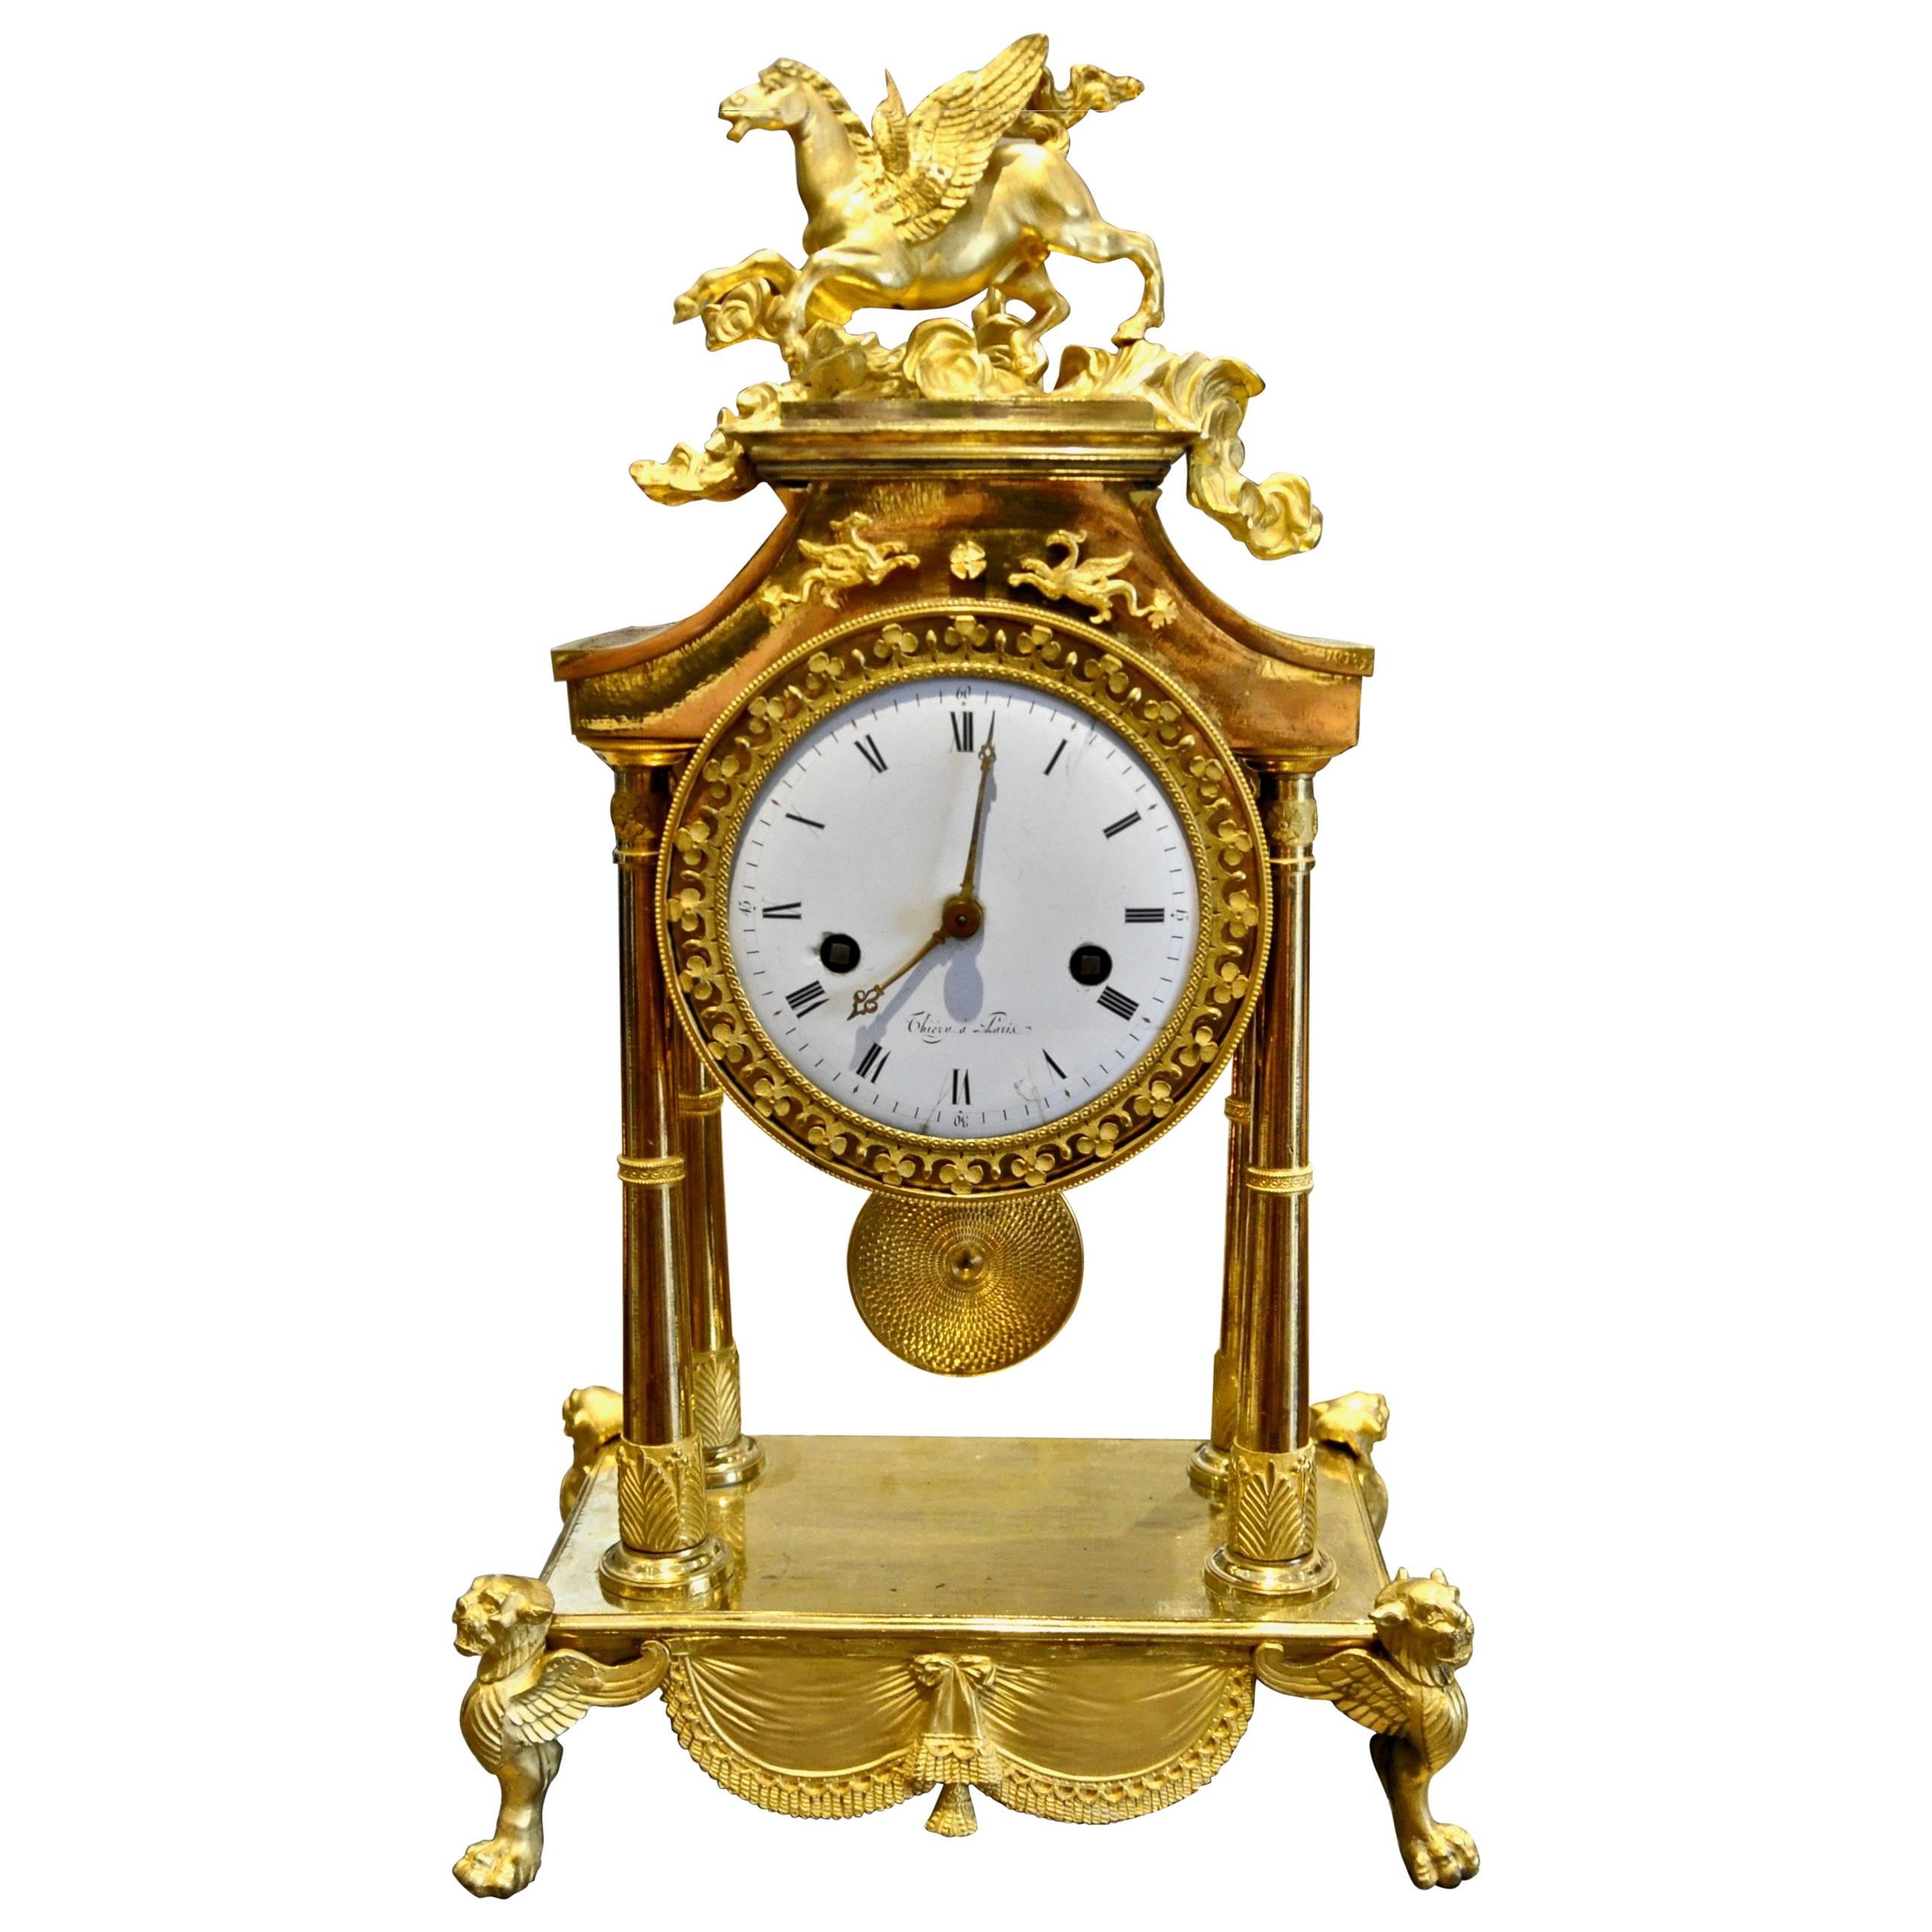 Period French Ormolu Director Pegasus Clock, circa 1795